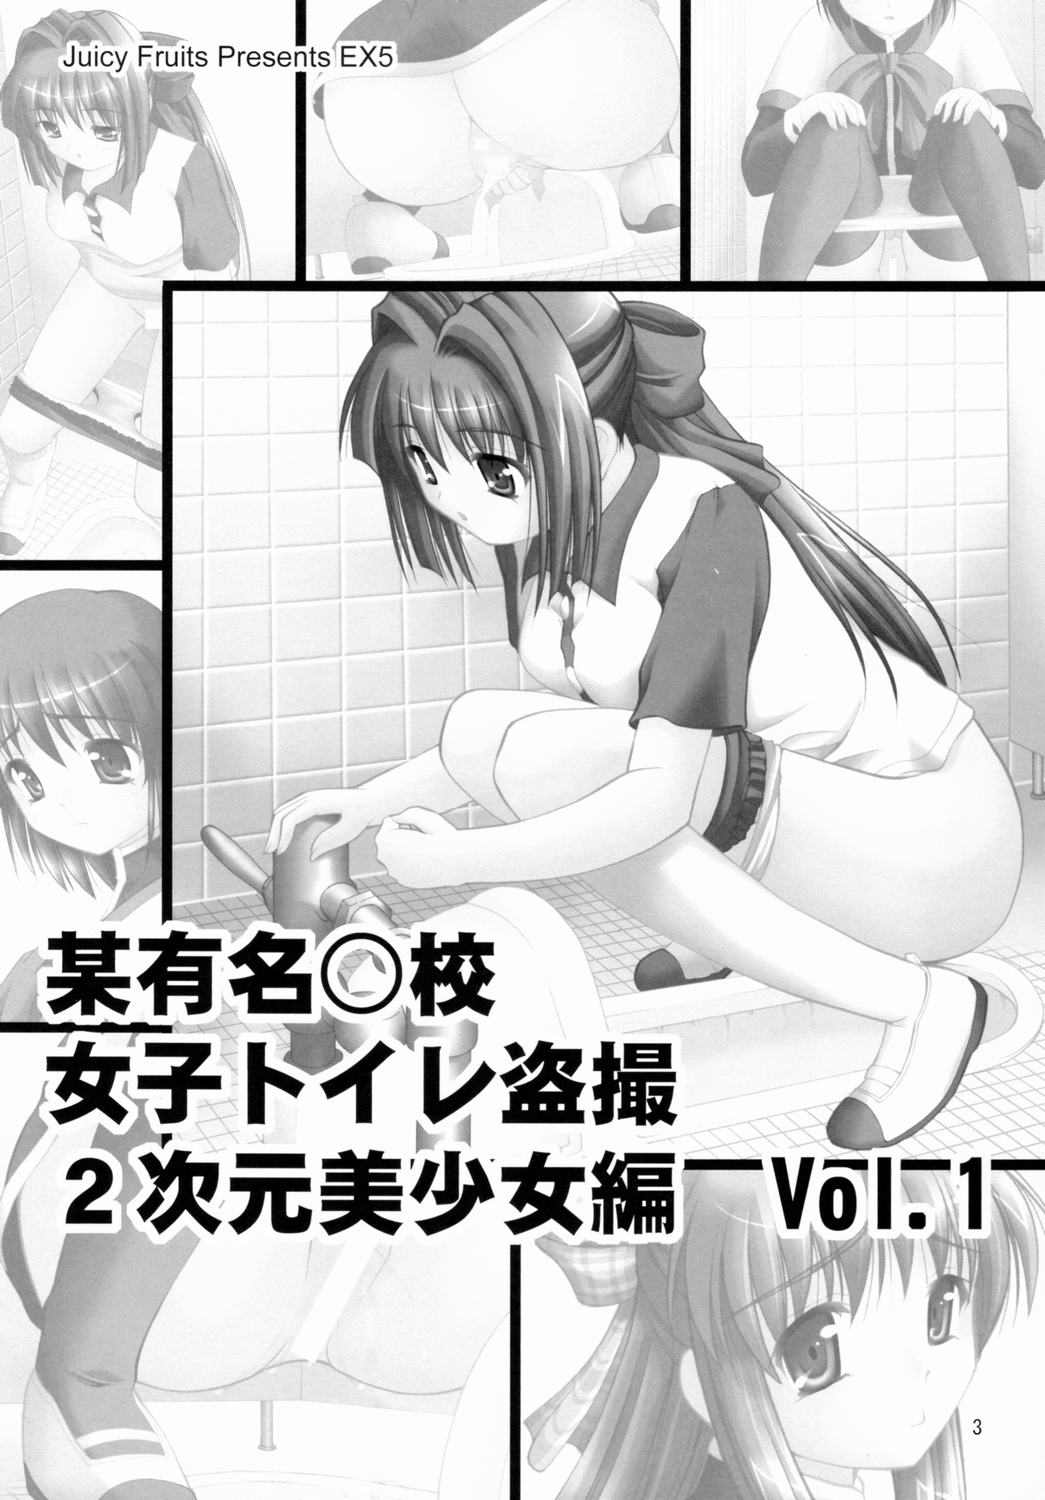 [Juicy Fruits] EX 8 Toilet peeping at 2D-girls (Vol. 1) 